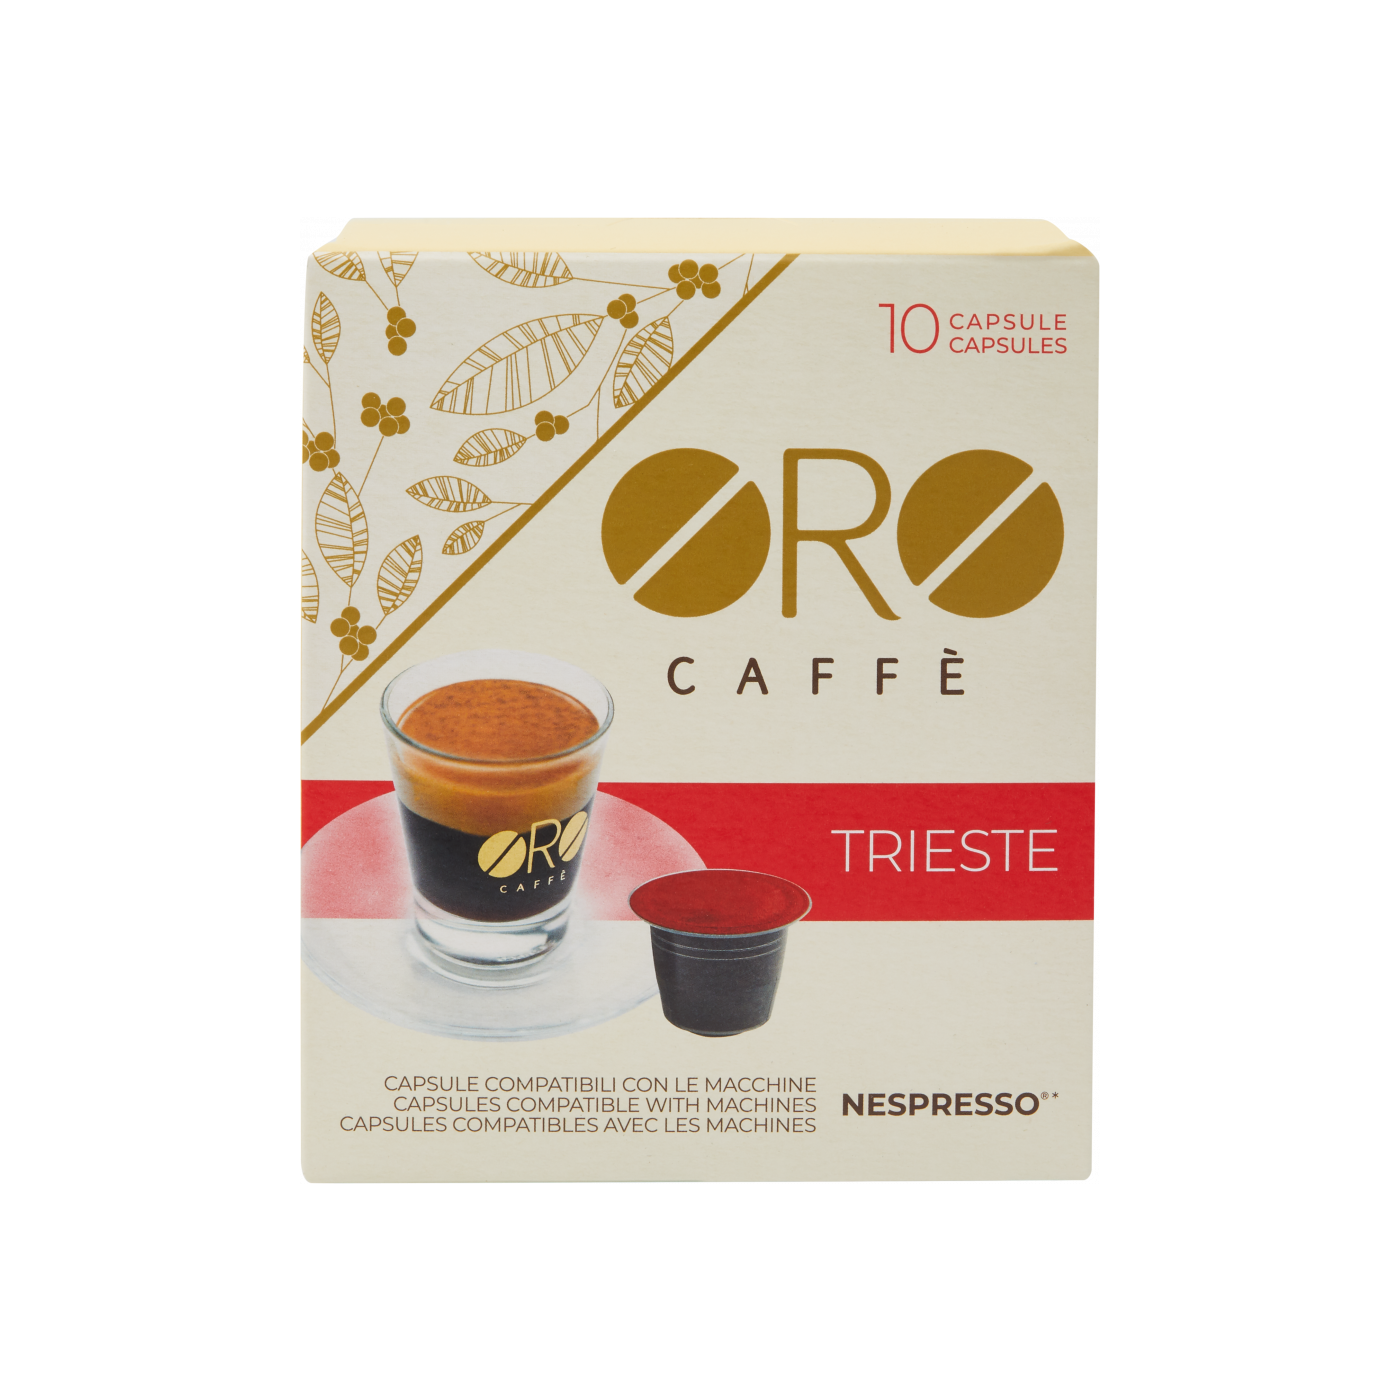 ORO Caffè Trieste Capsules for Nespresso (10)